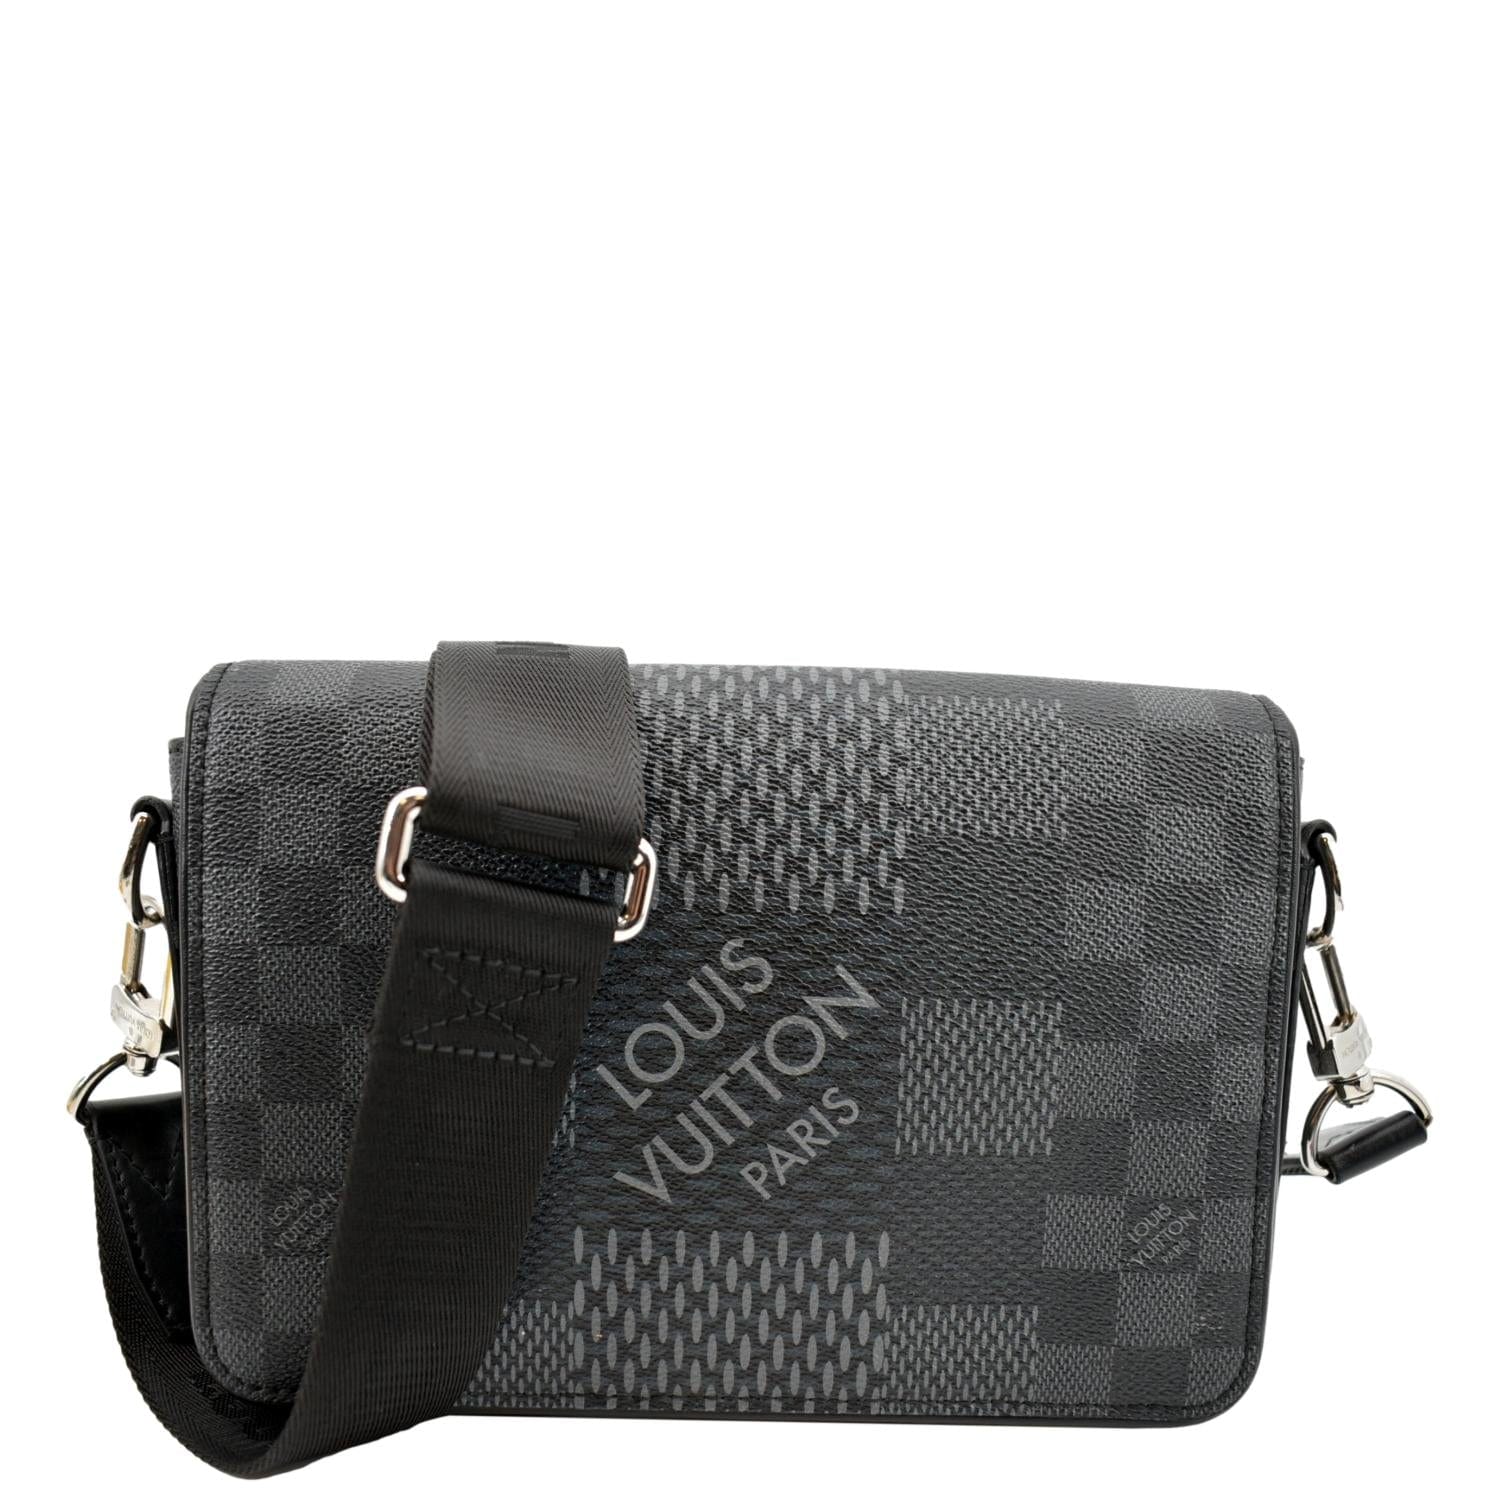 Louis Vuitton Lv messenger man bag Damier graphite  Louis vuitton  messenger bag, Luxury travel bag, Louis vuitton luggage